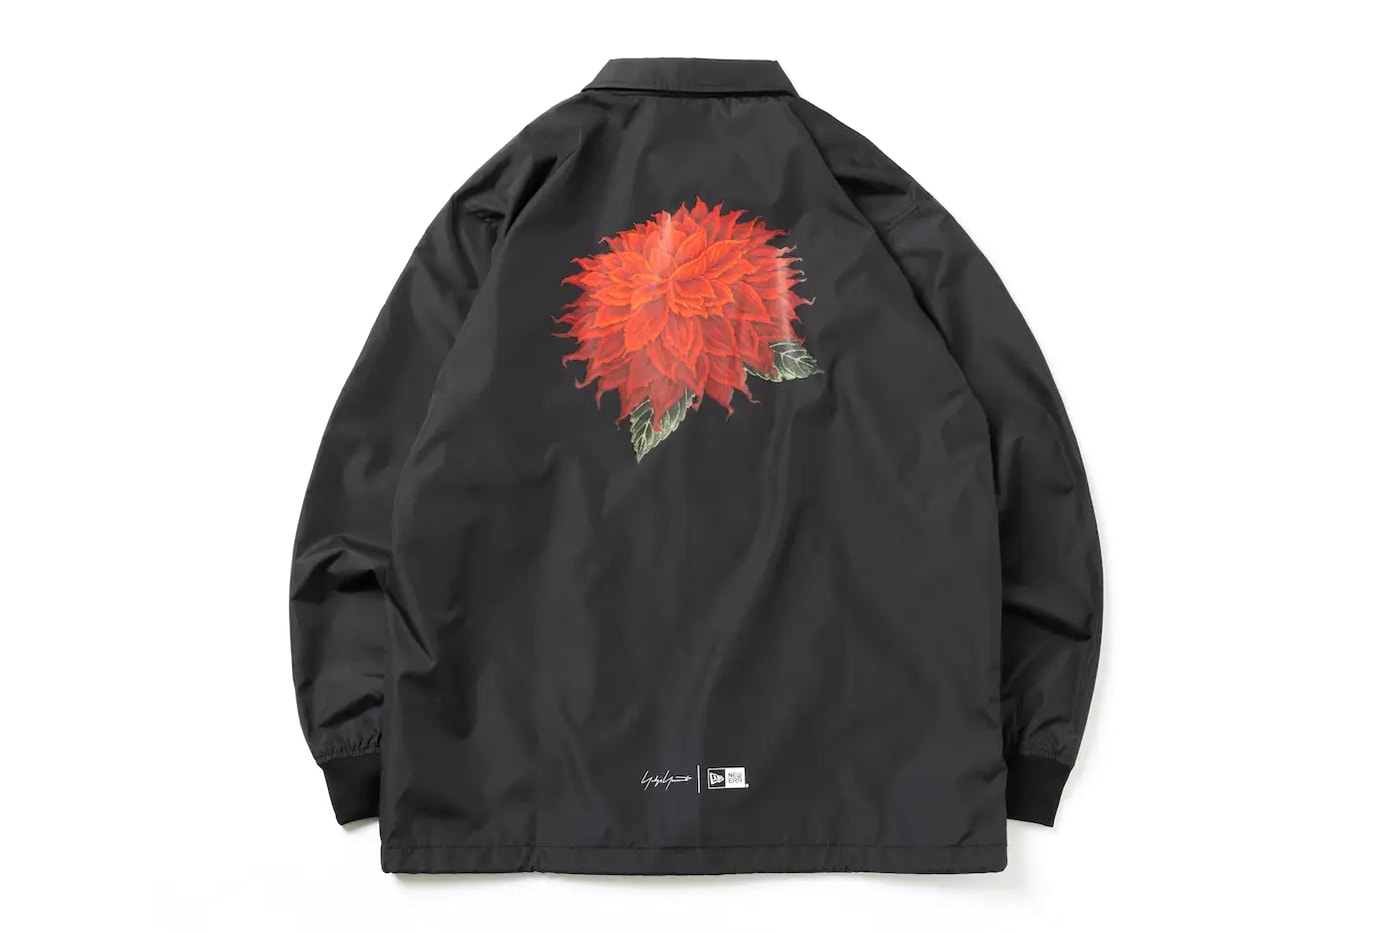 Yohji Yamamoto New Era Spring Summer 2023 ss23 dahlia flower 9thirty bucket 59fifty coach jacket hoodie tee shirt release info date price